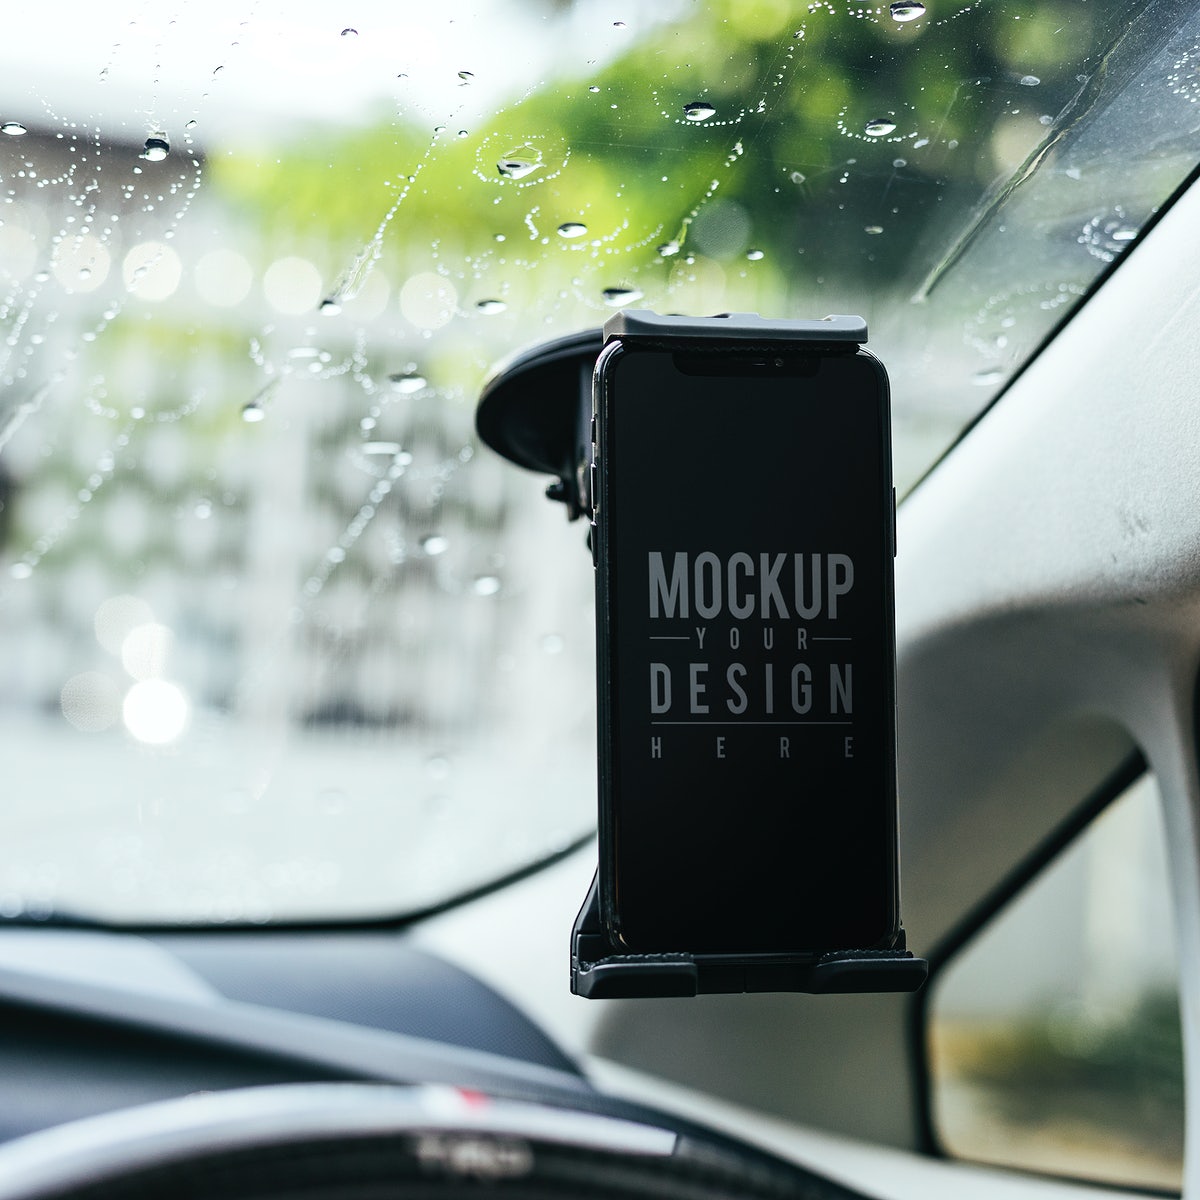 Free Mockup Of Mobile Phone Screen